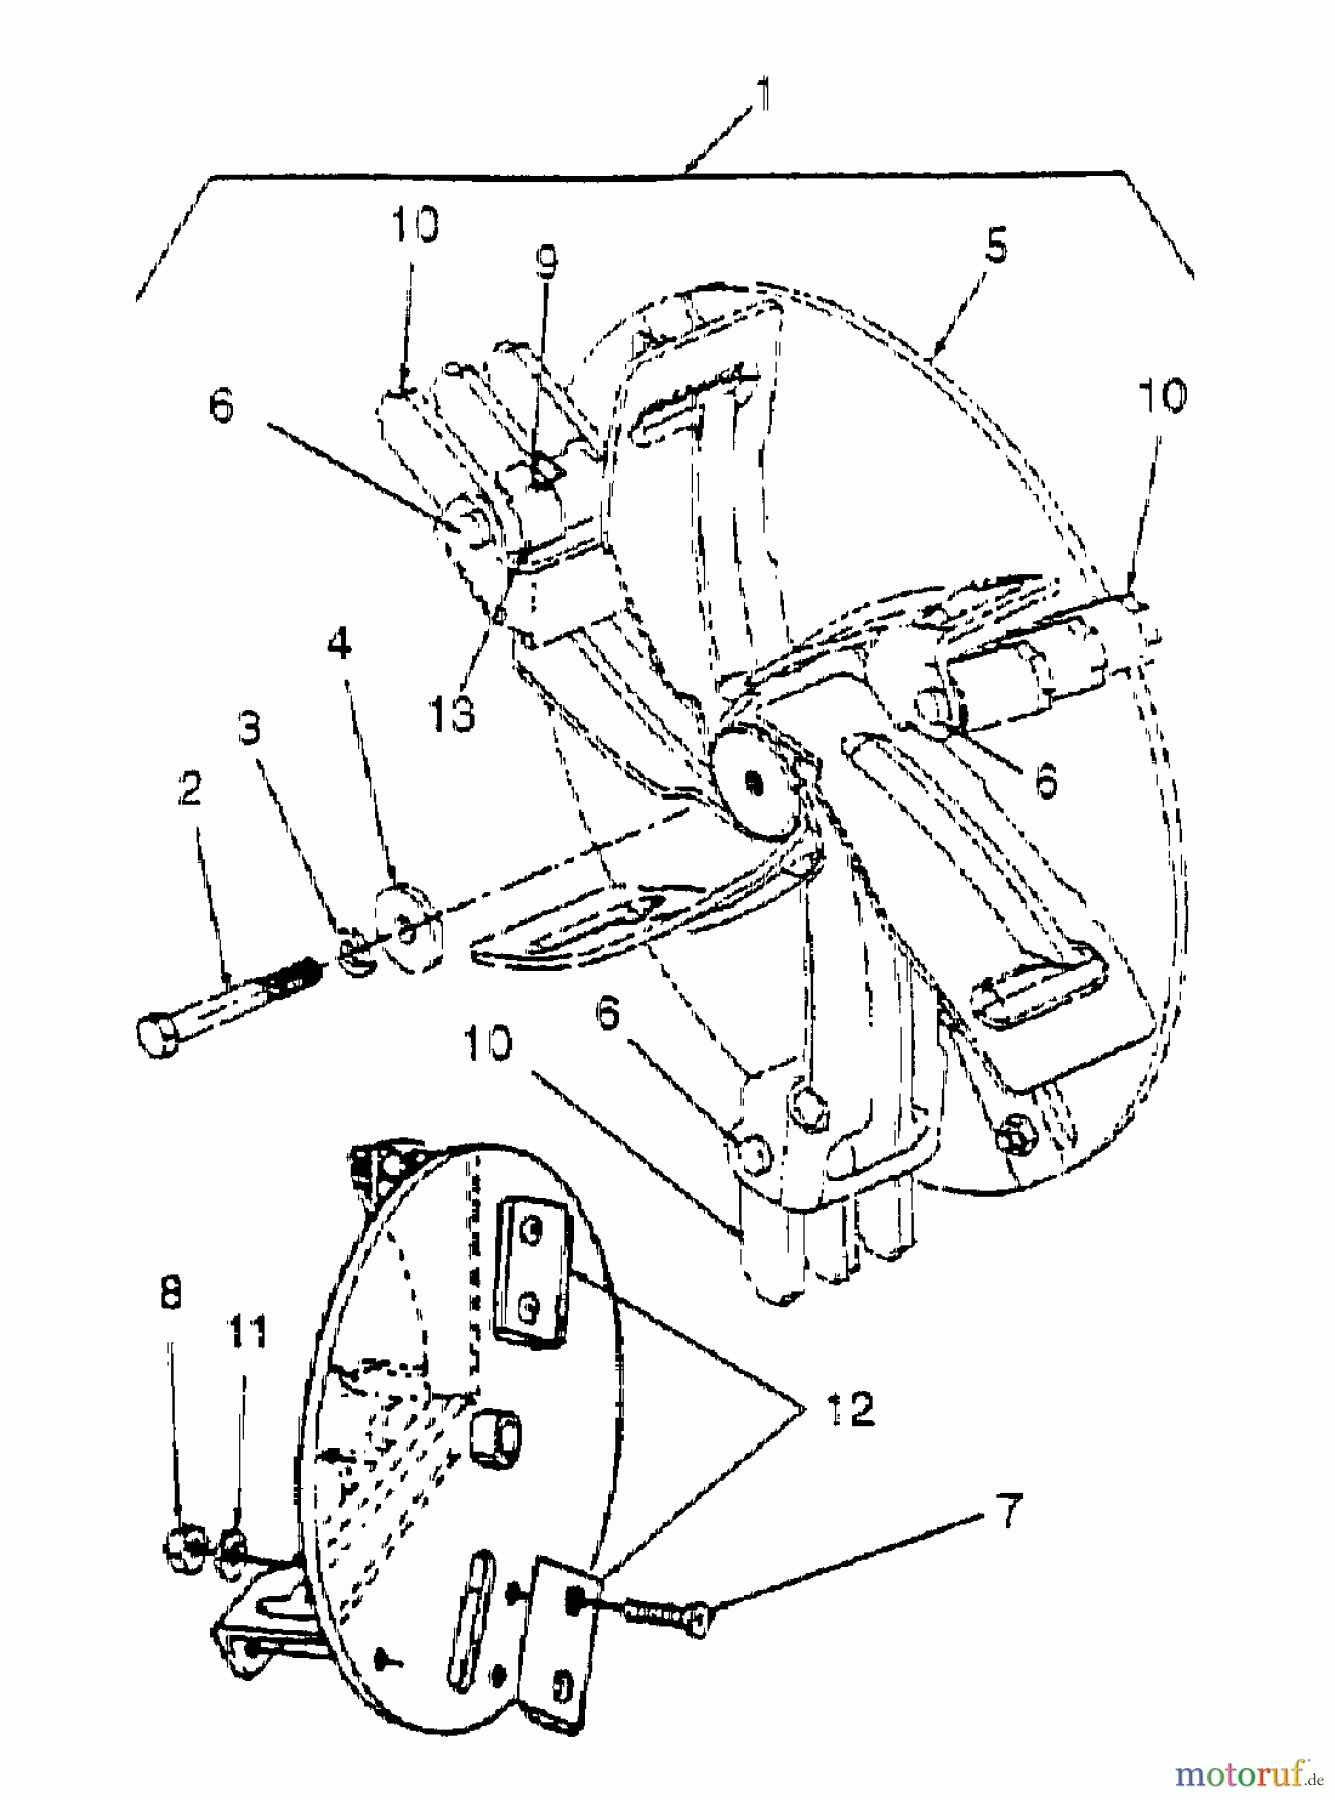  Gutbrod Leaf blower, Blower vac 203 B 24A-203B604  (1999) Impeller with blades